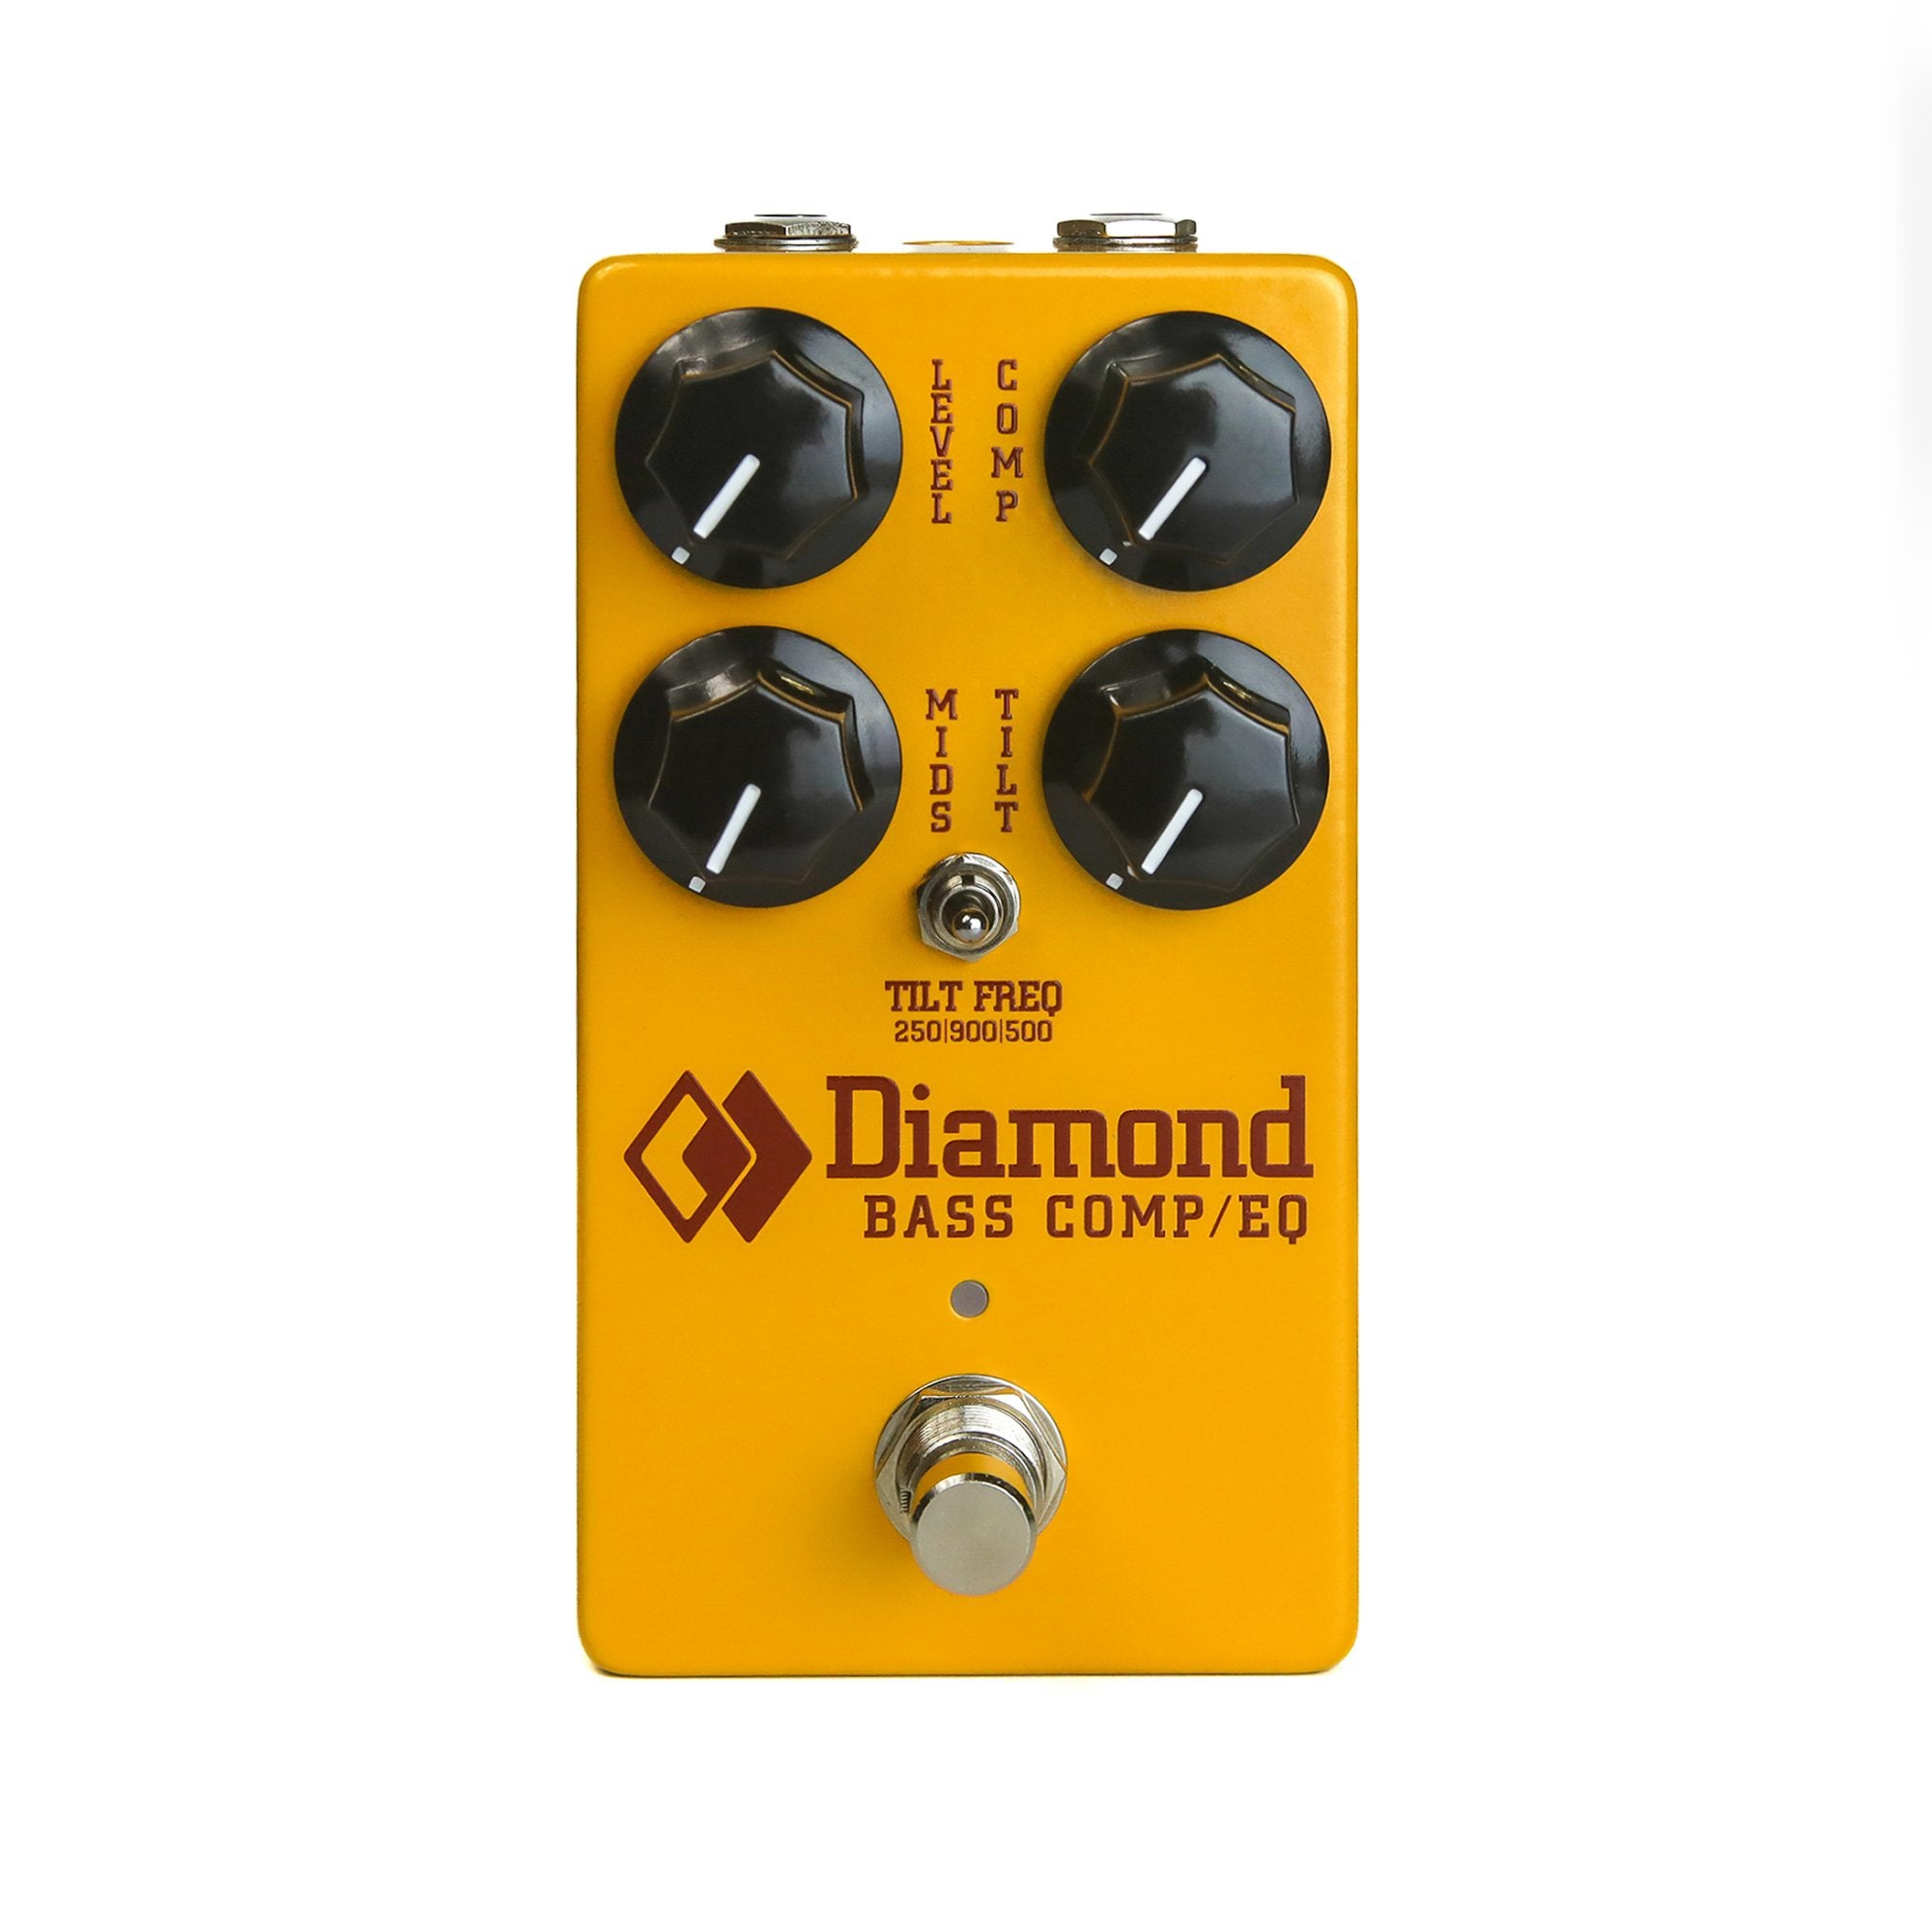 Diamond Pedals Bass Comp / EQ